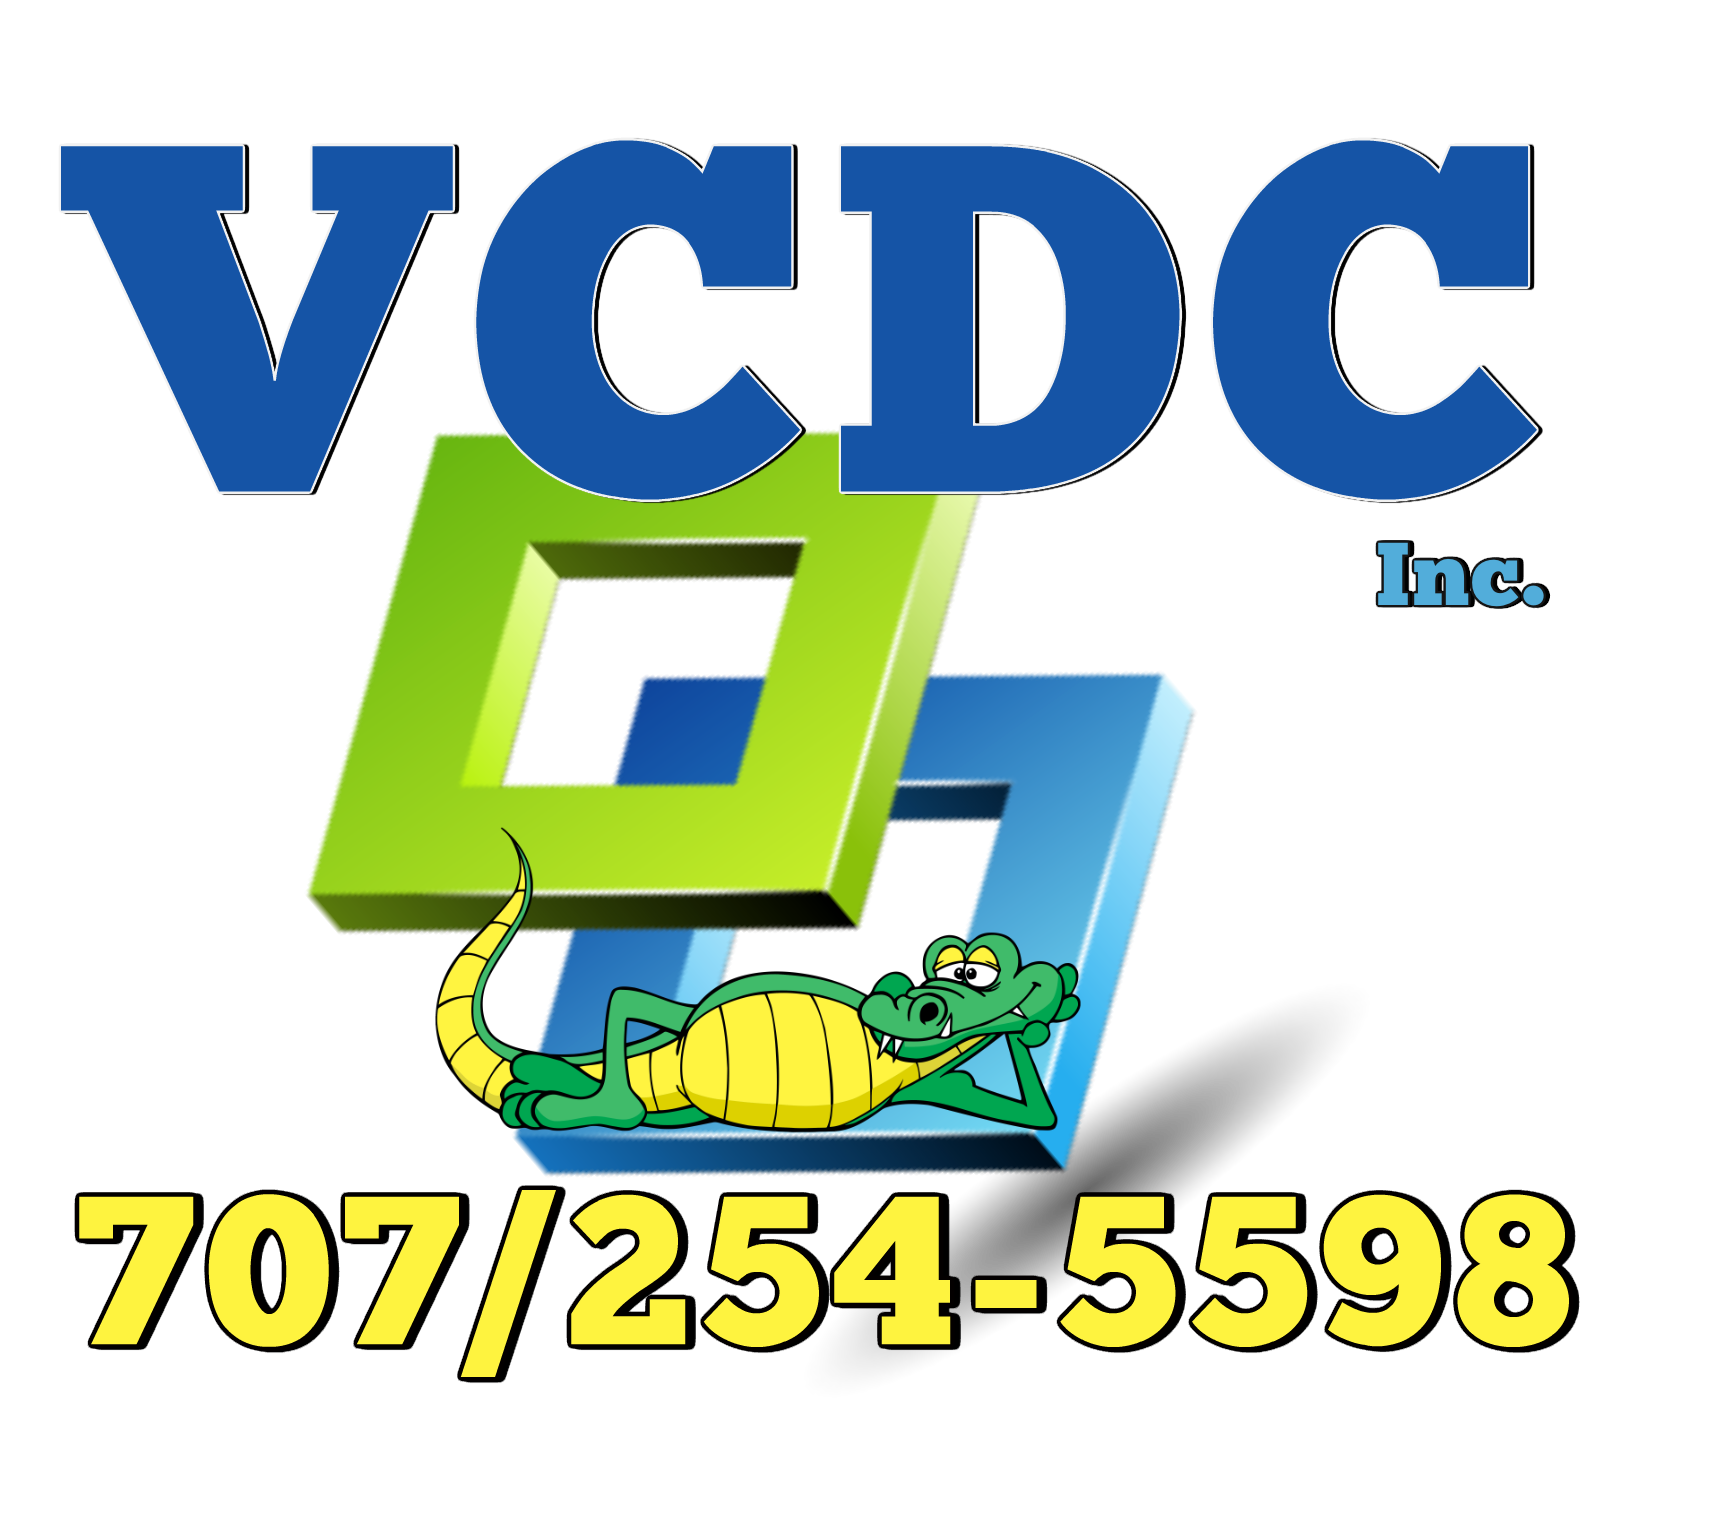 VCDC Inc